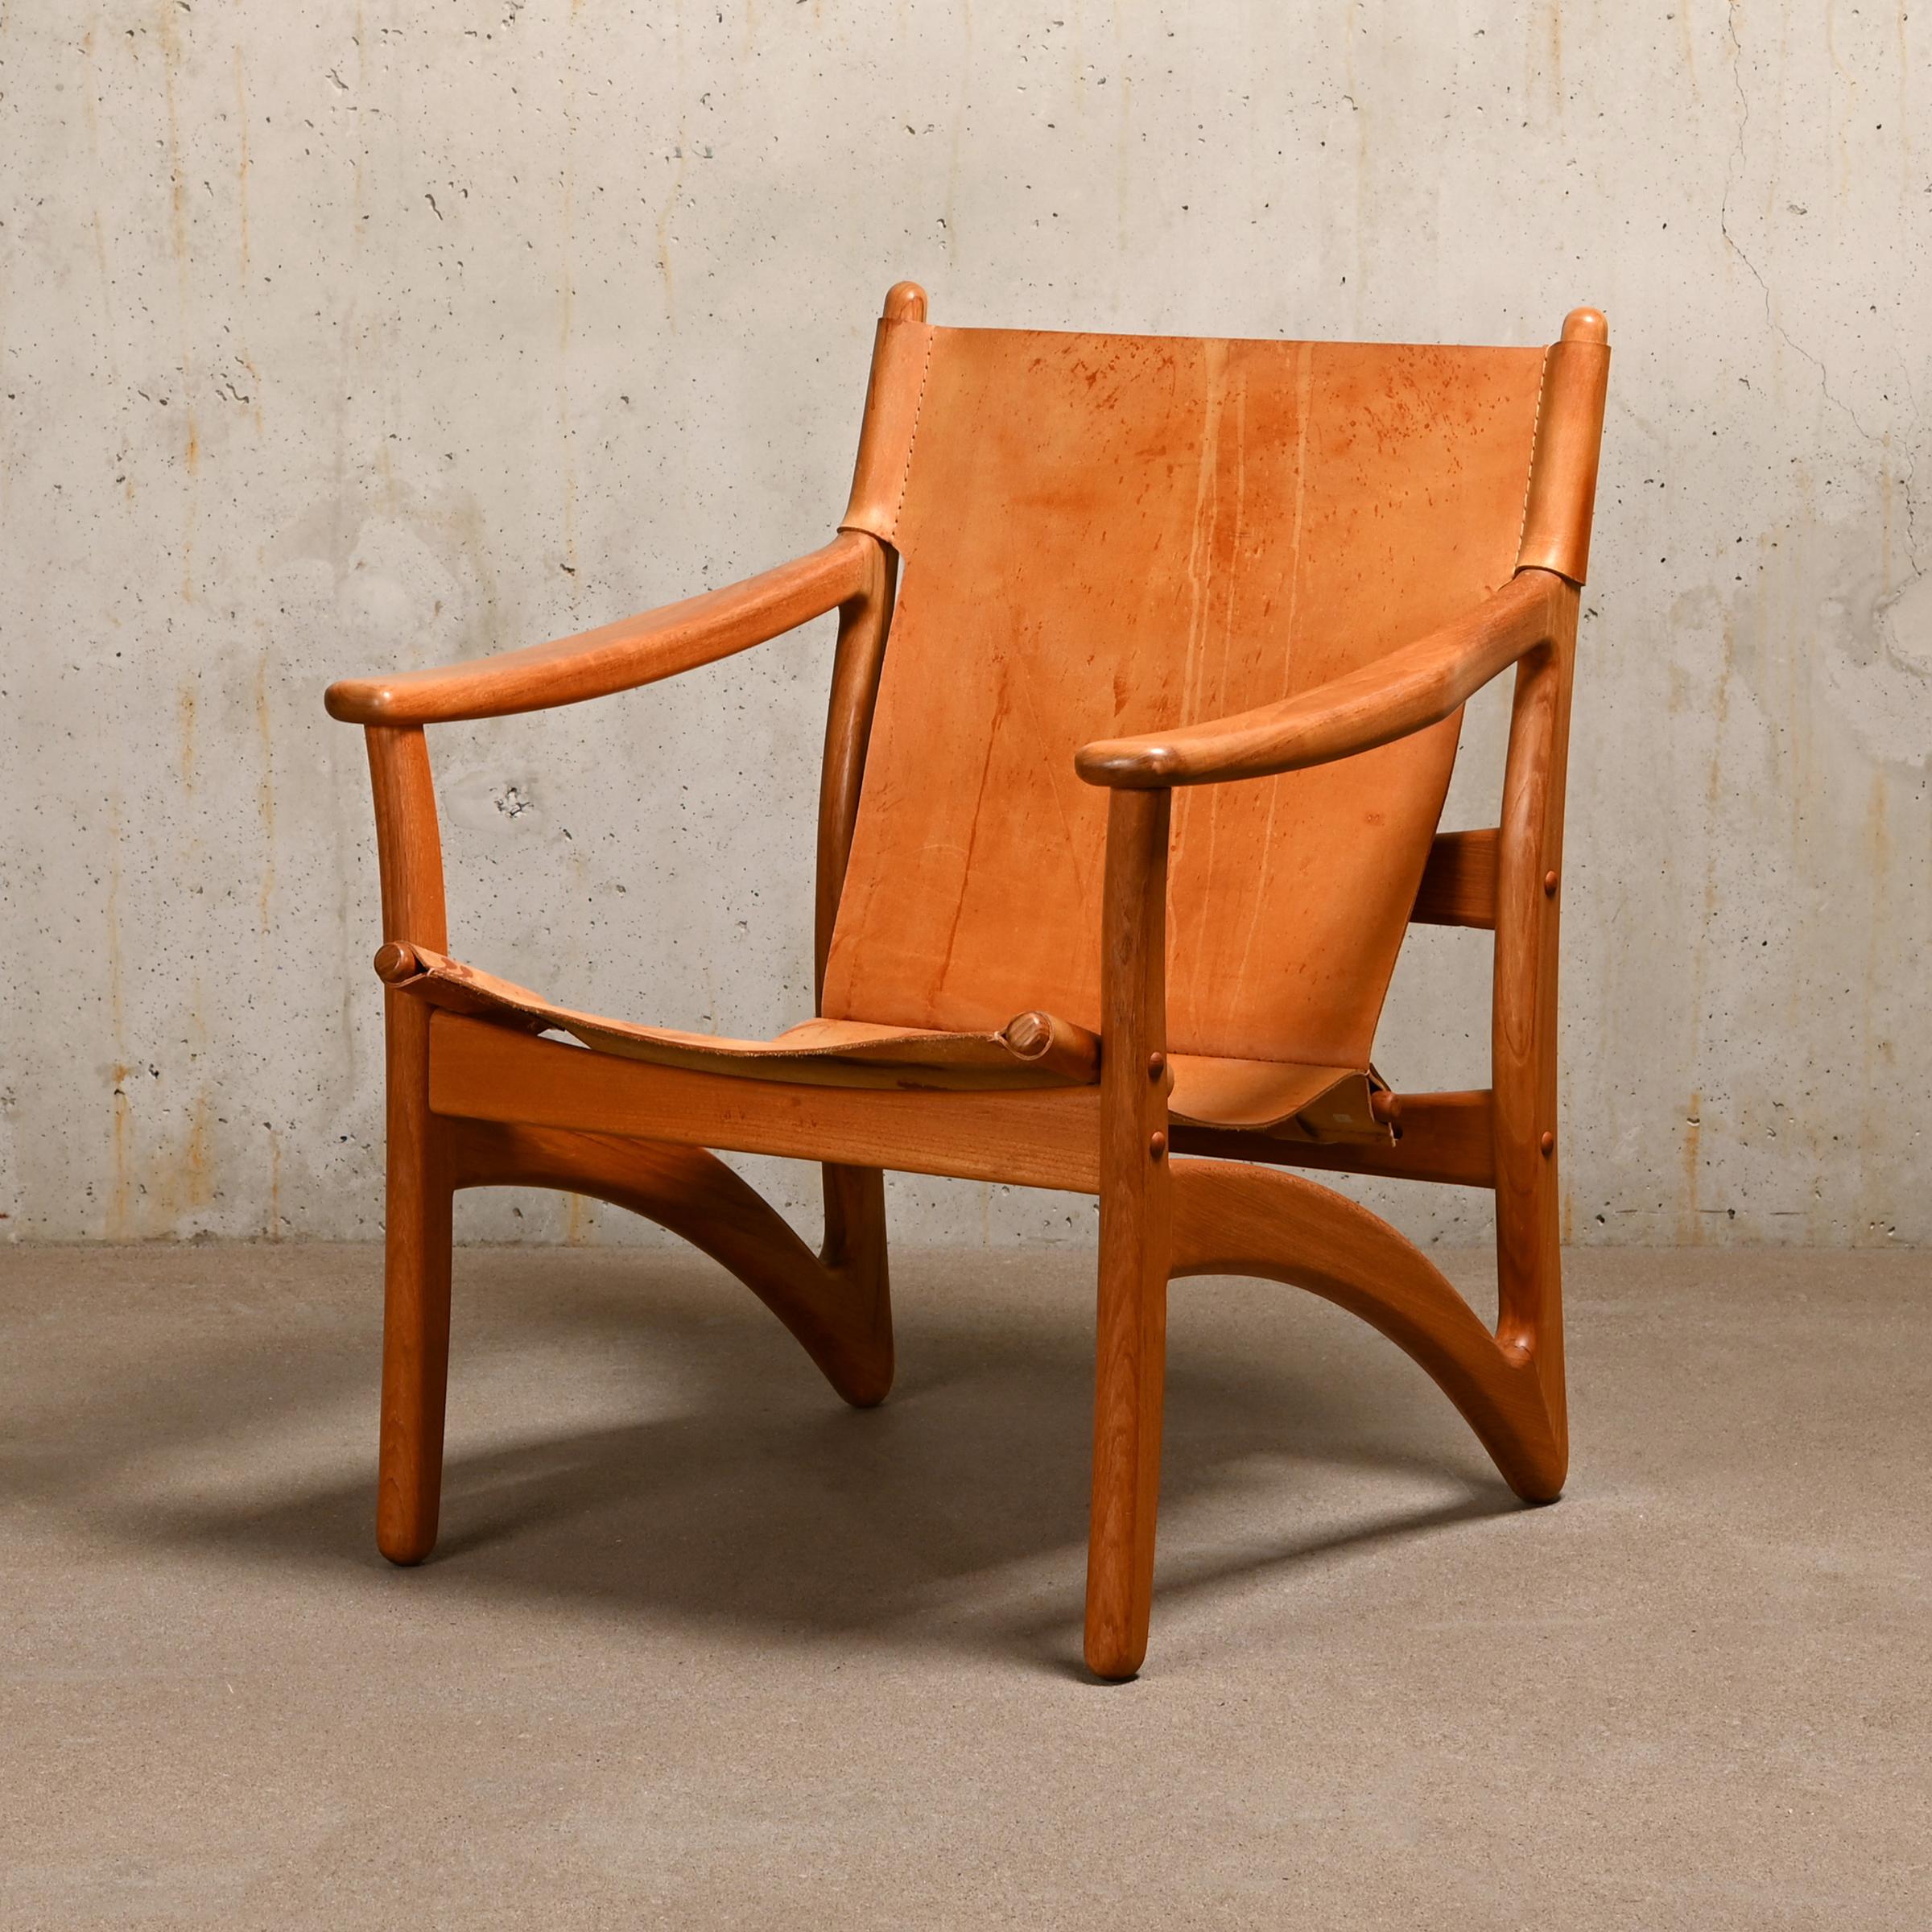 Arne Vodder Pair Lounge Chairs in Teak and Saddle Leather for Kircodan, Denmark 1